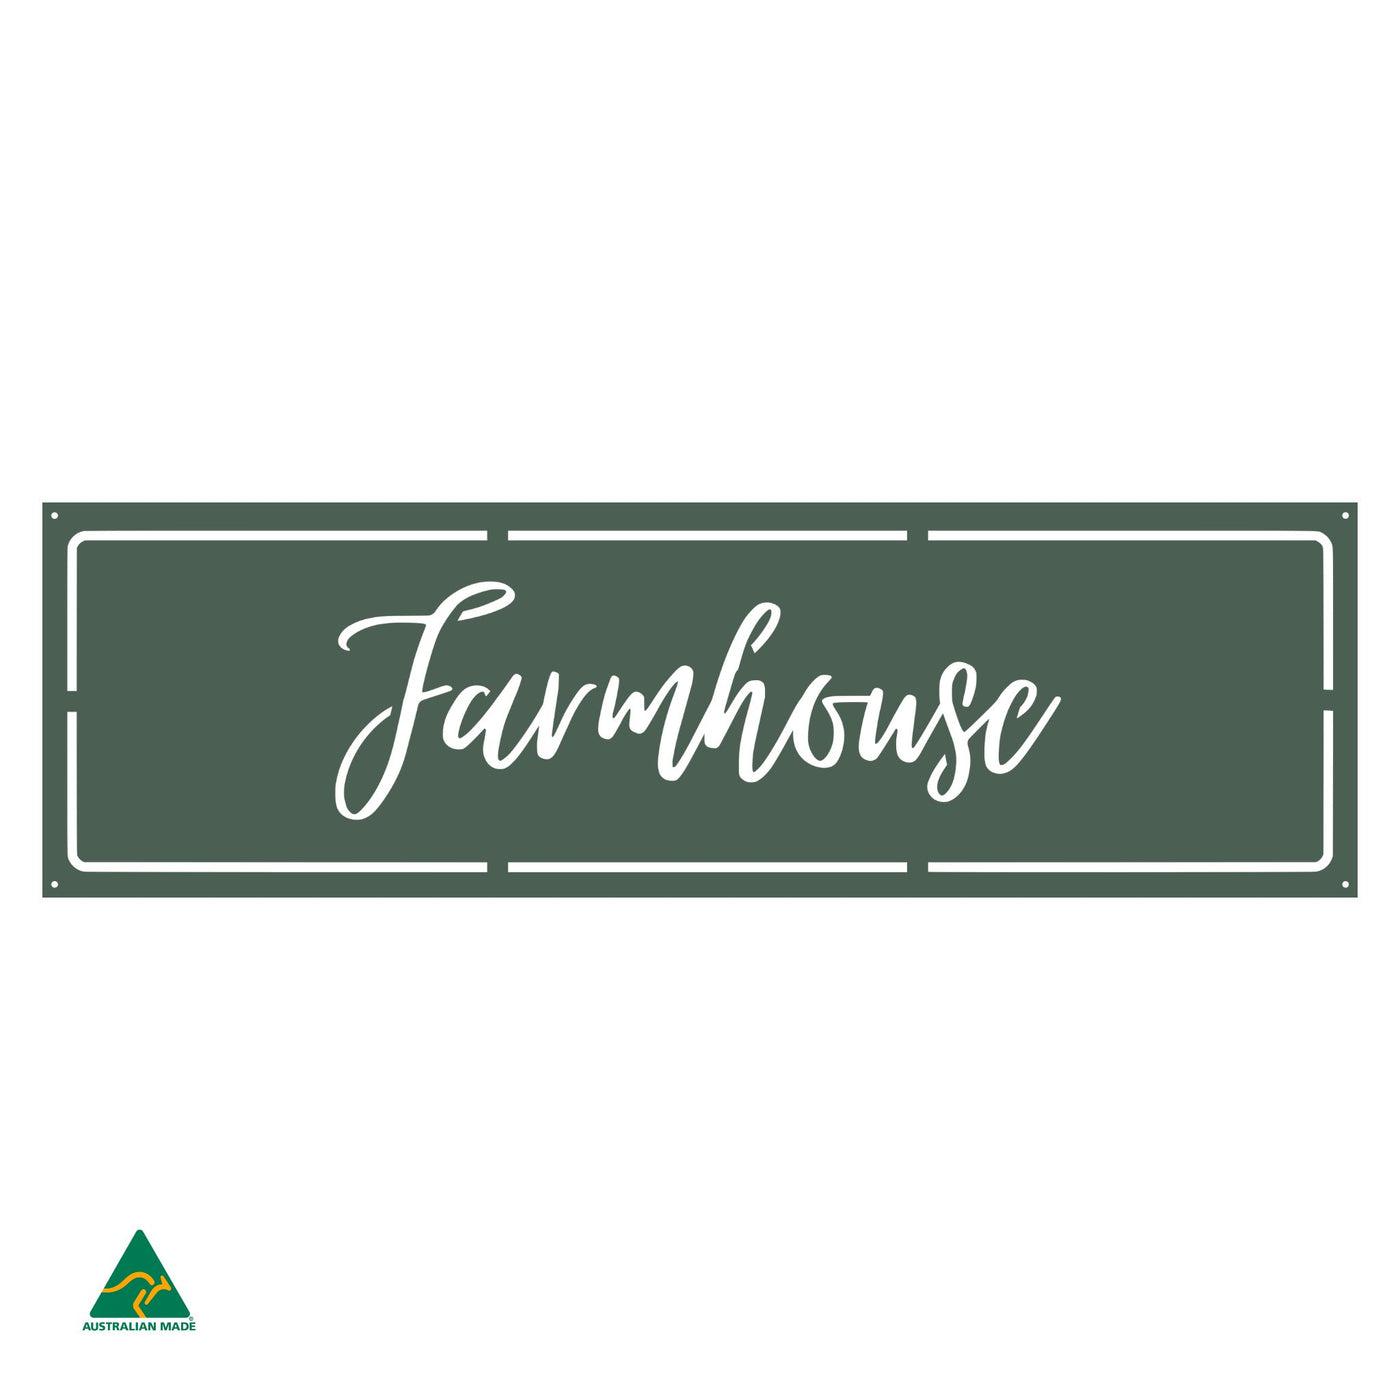 Farmhouse Wall Sign | Cottage Green Satin